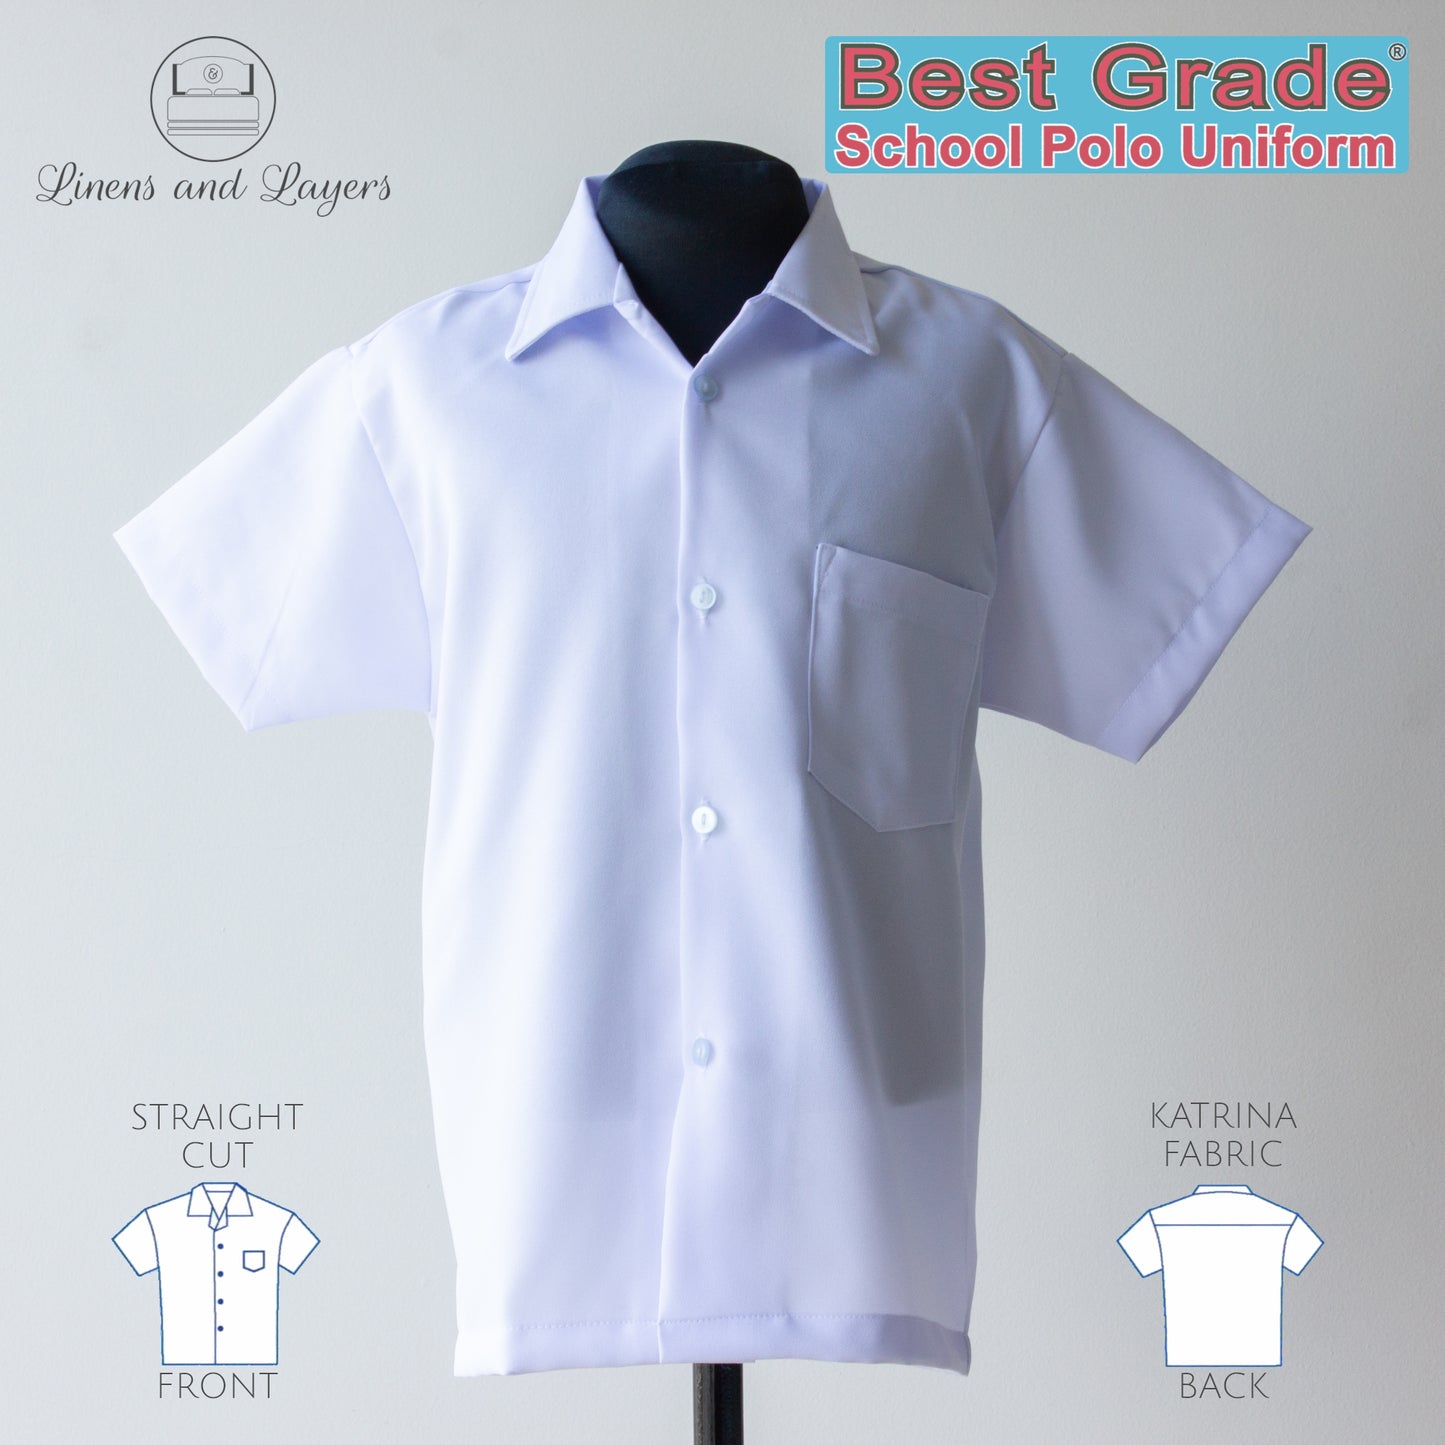 Best Grade Unisex School Polo Uniform - Straight Cut - Katrina